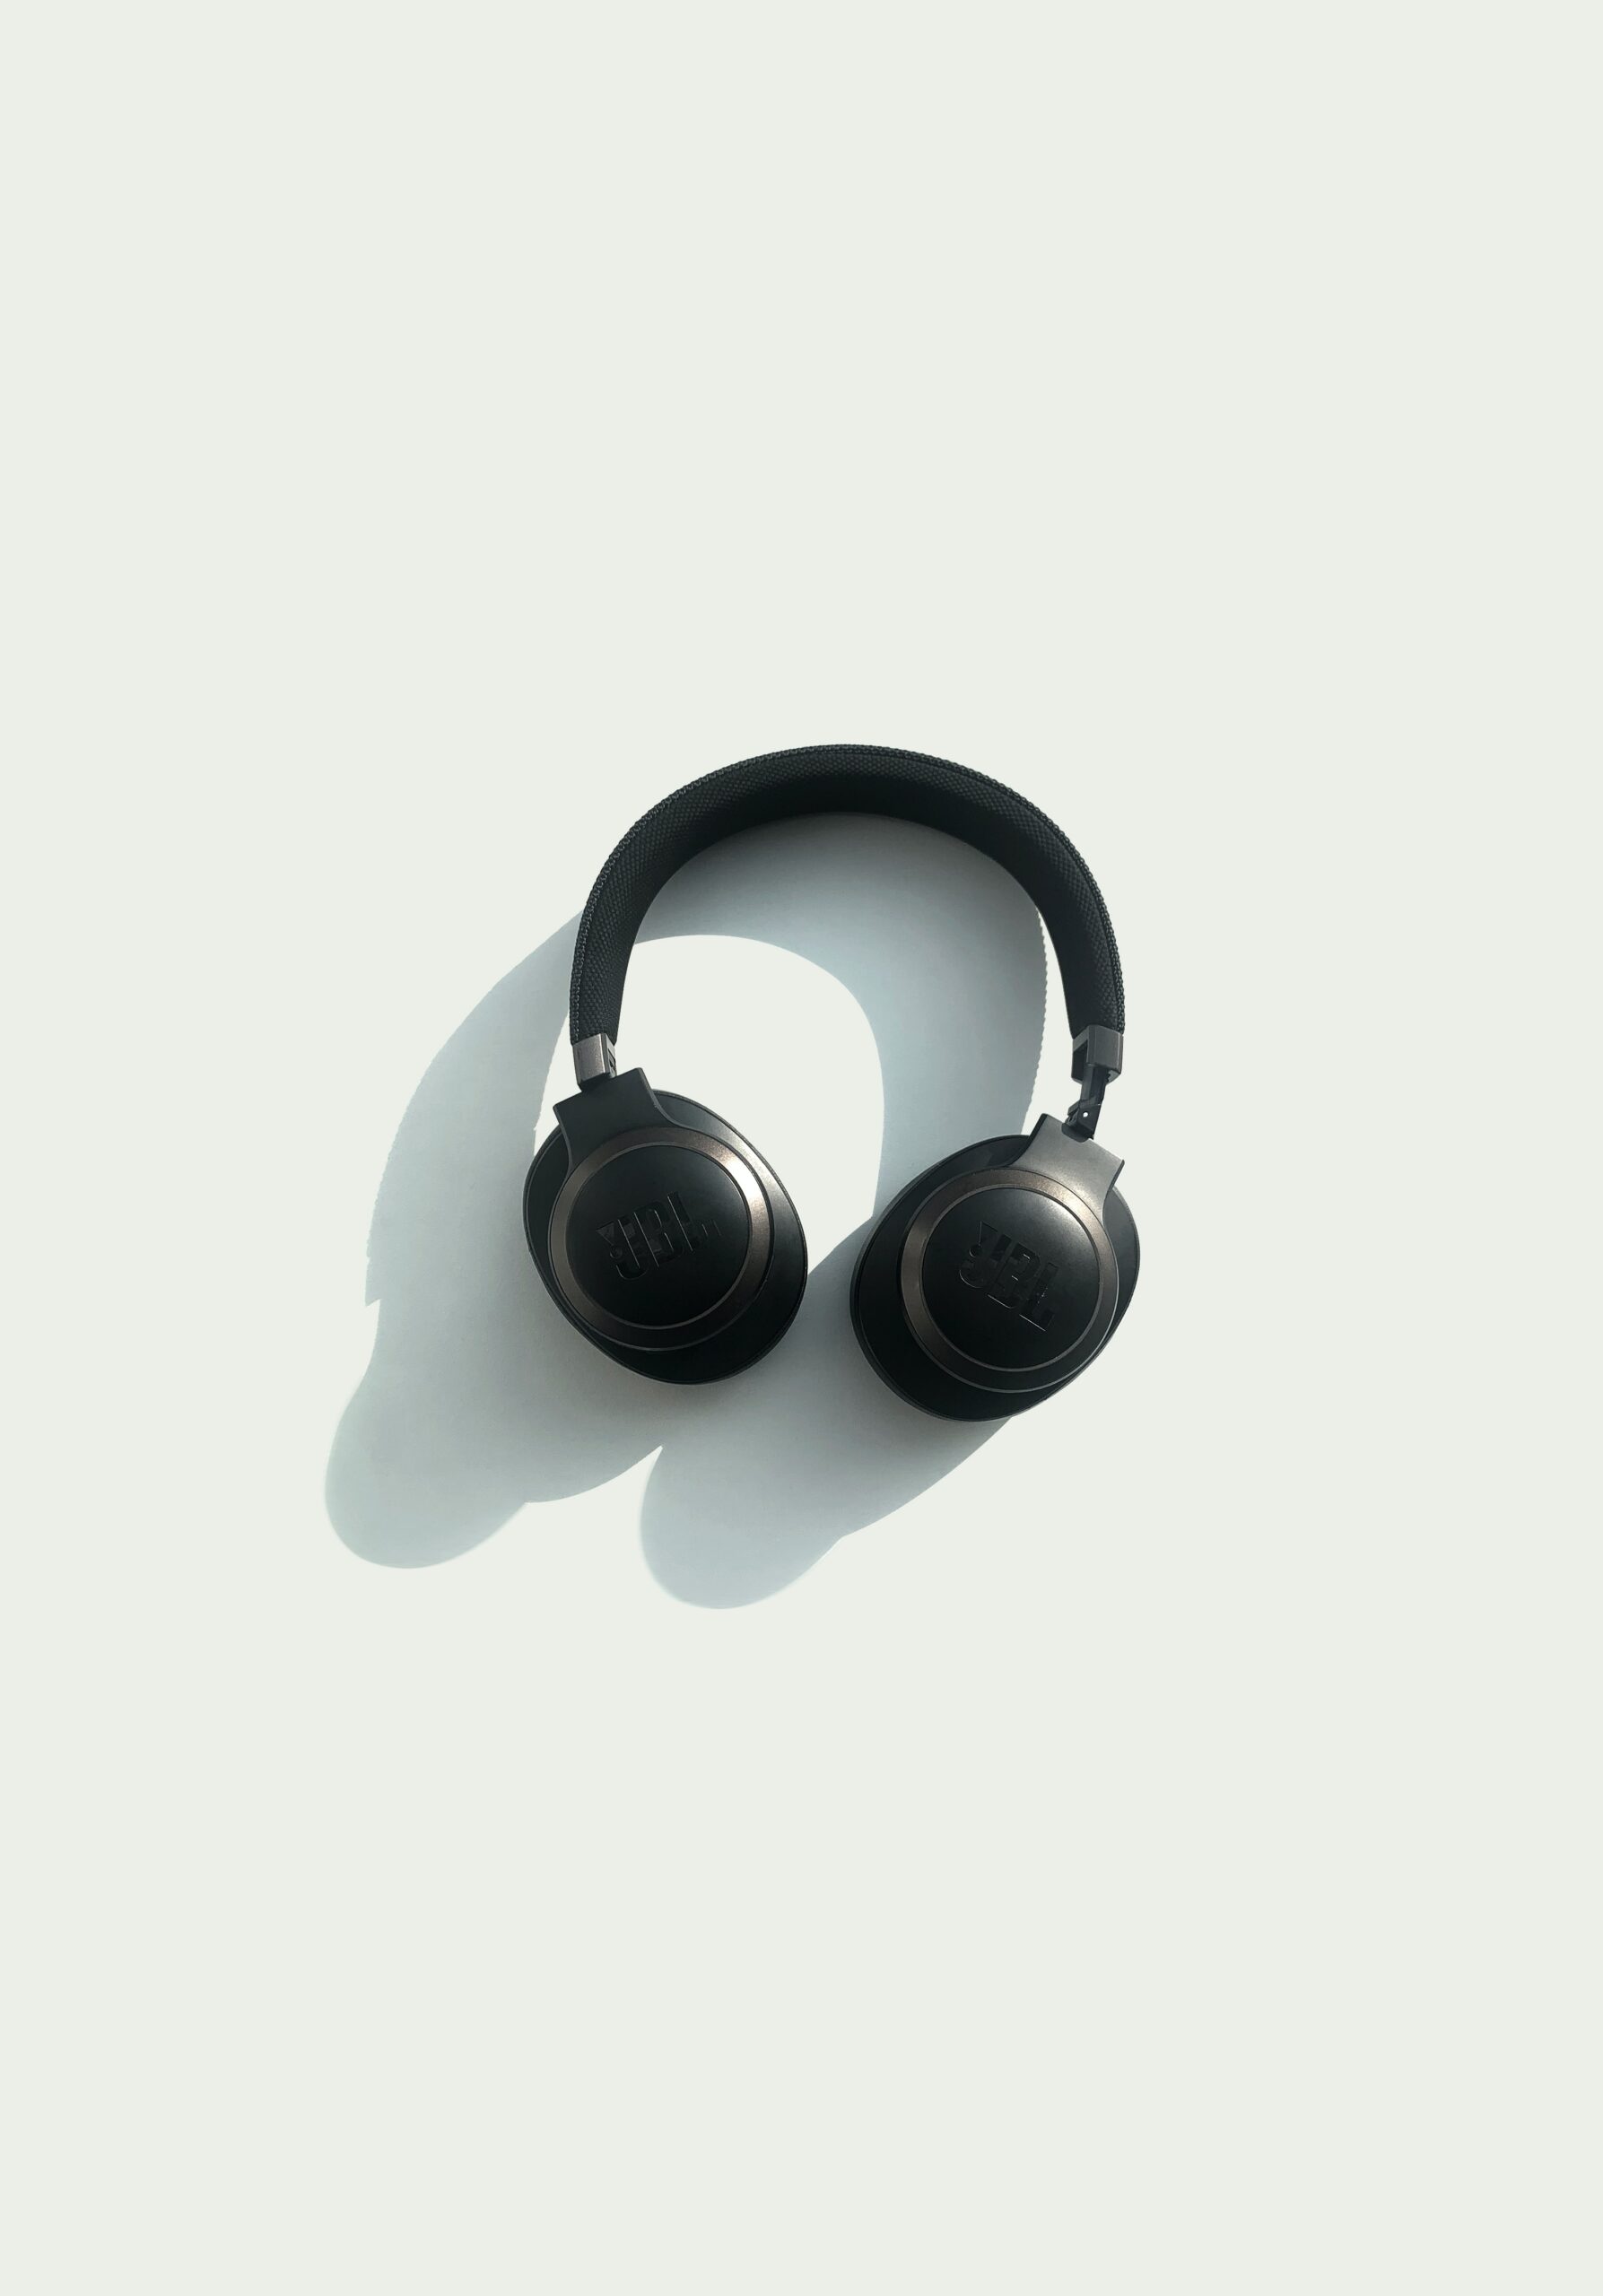 JBL Duet Bluetooth Wireless On-Ear Headphone Review